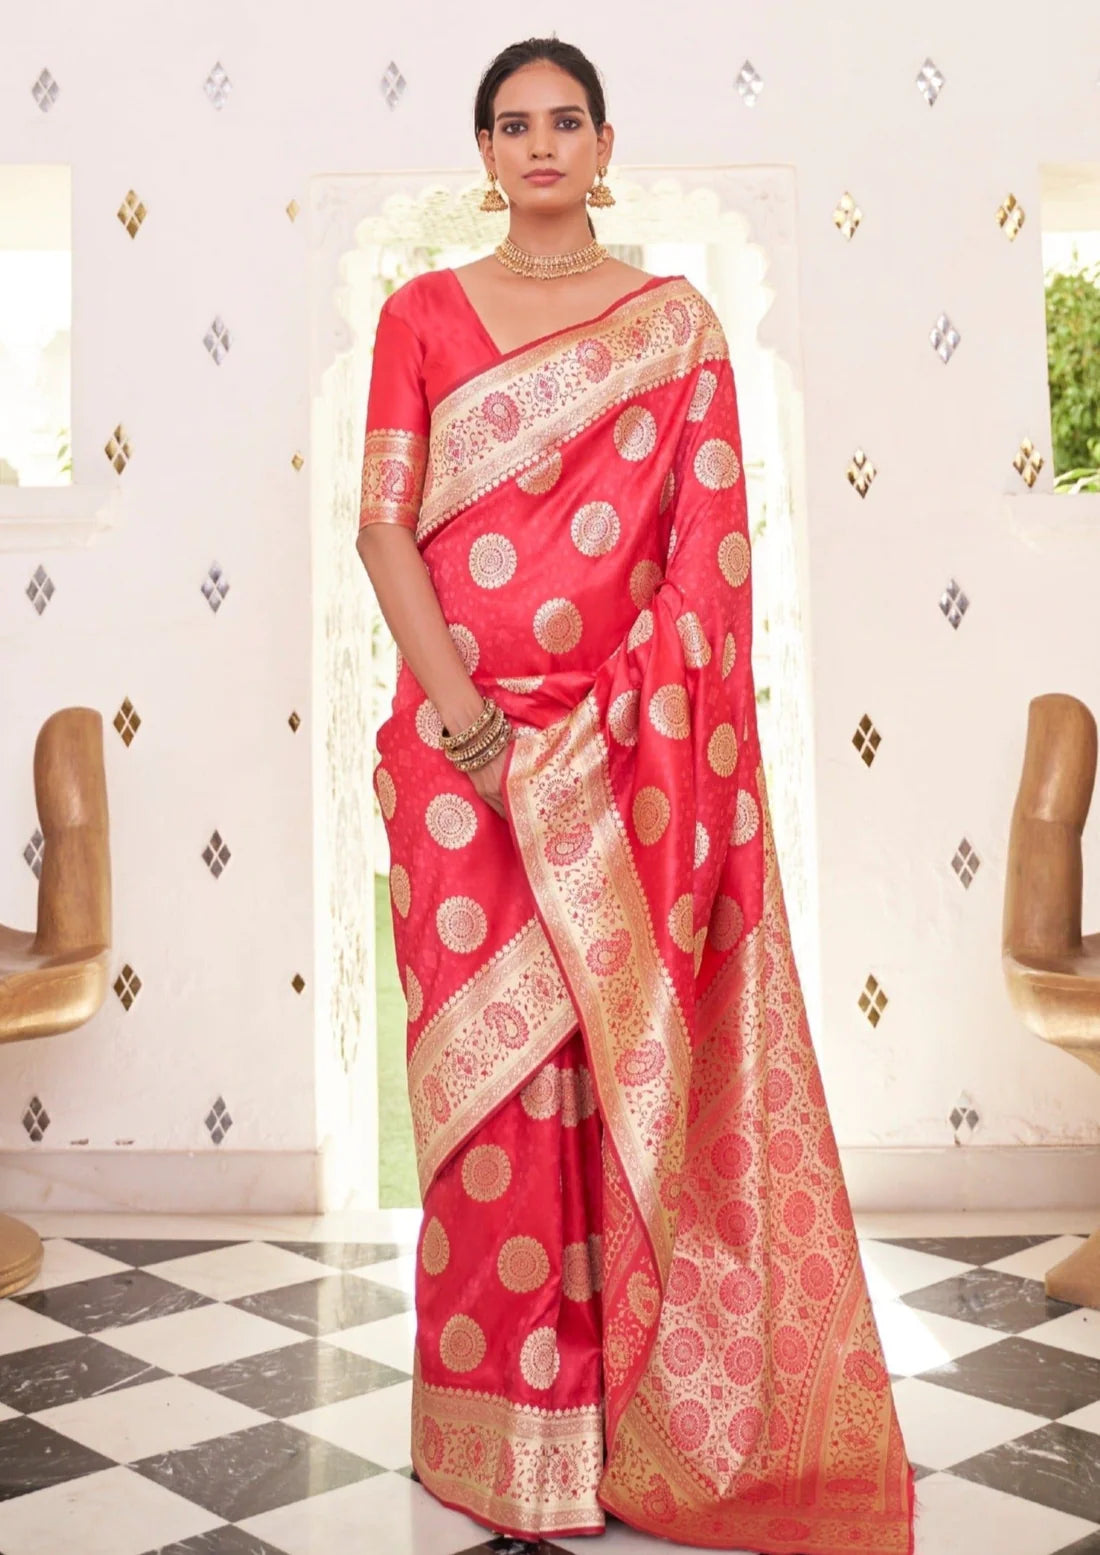 Handloom banarasi silk sarees online shopping india for wedding.